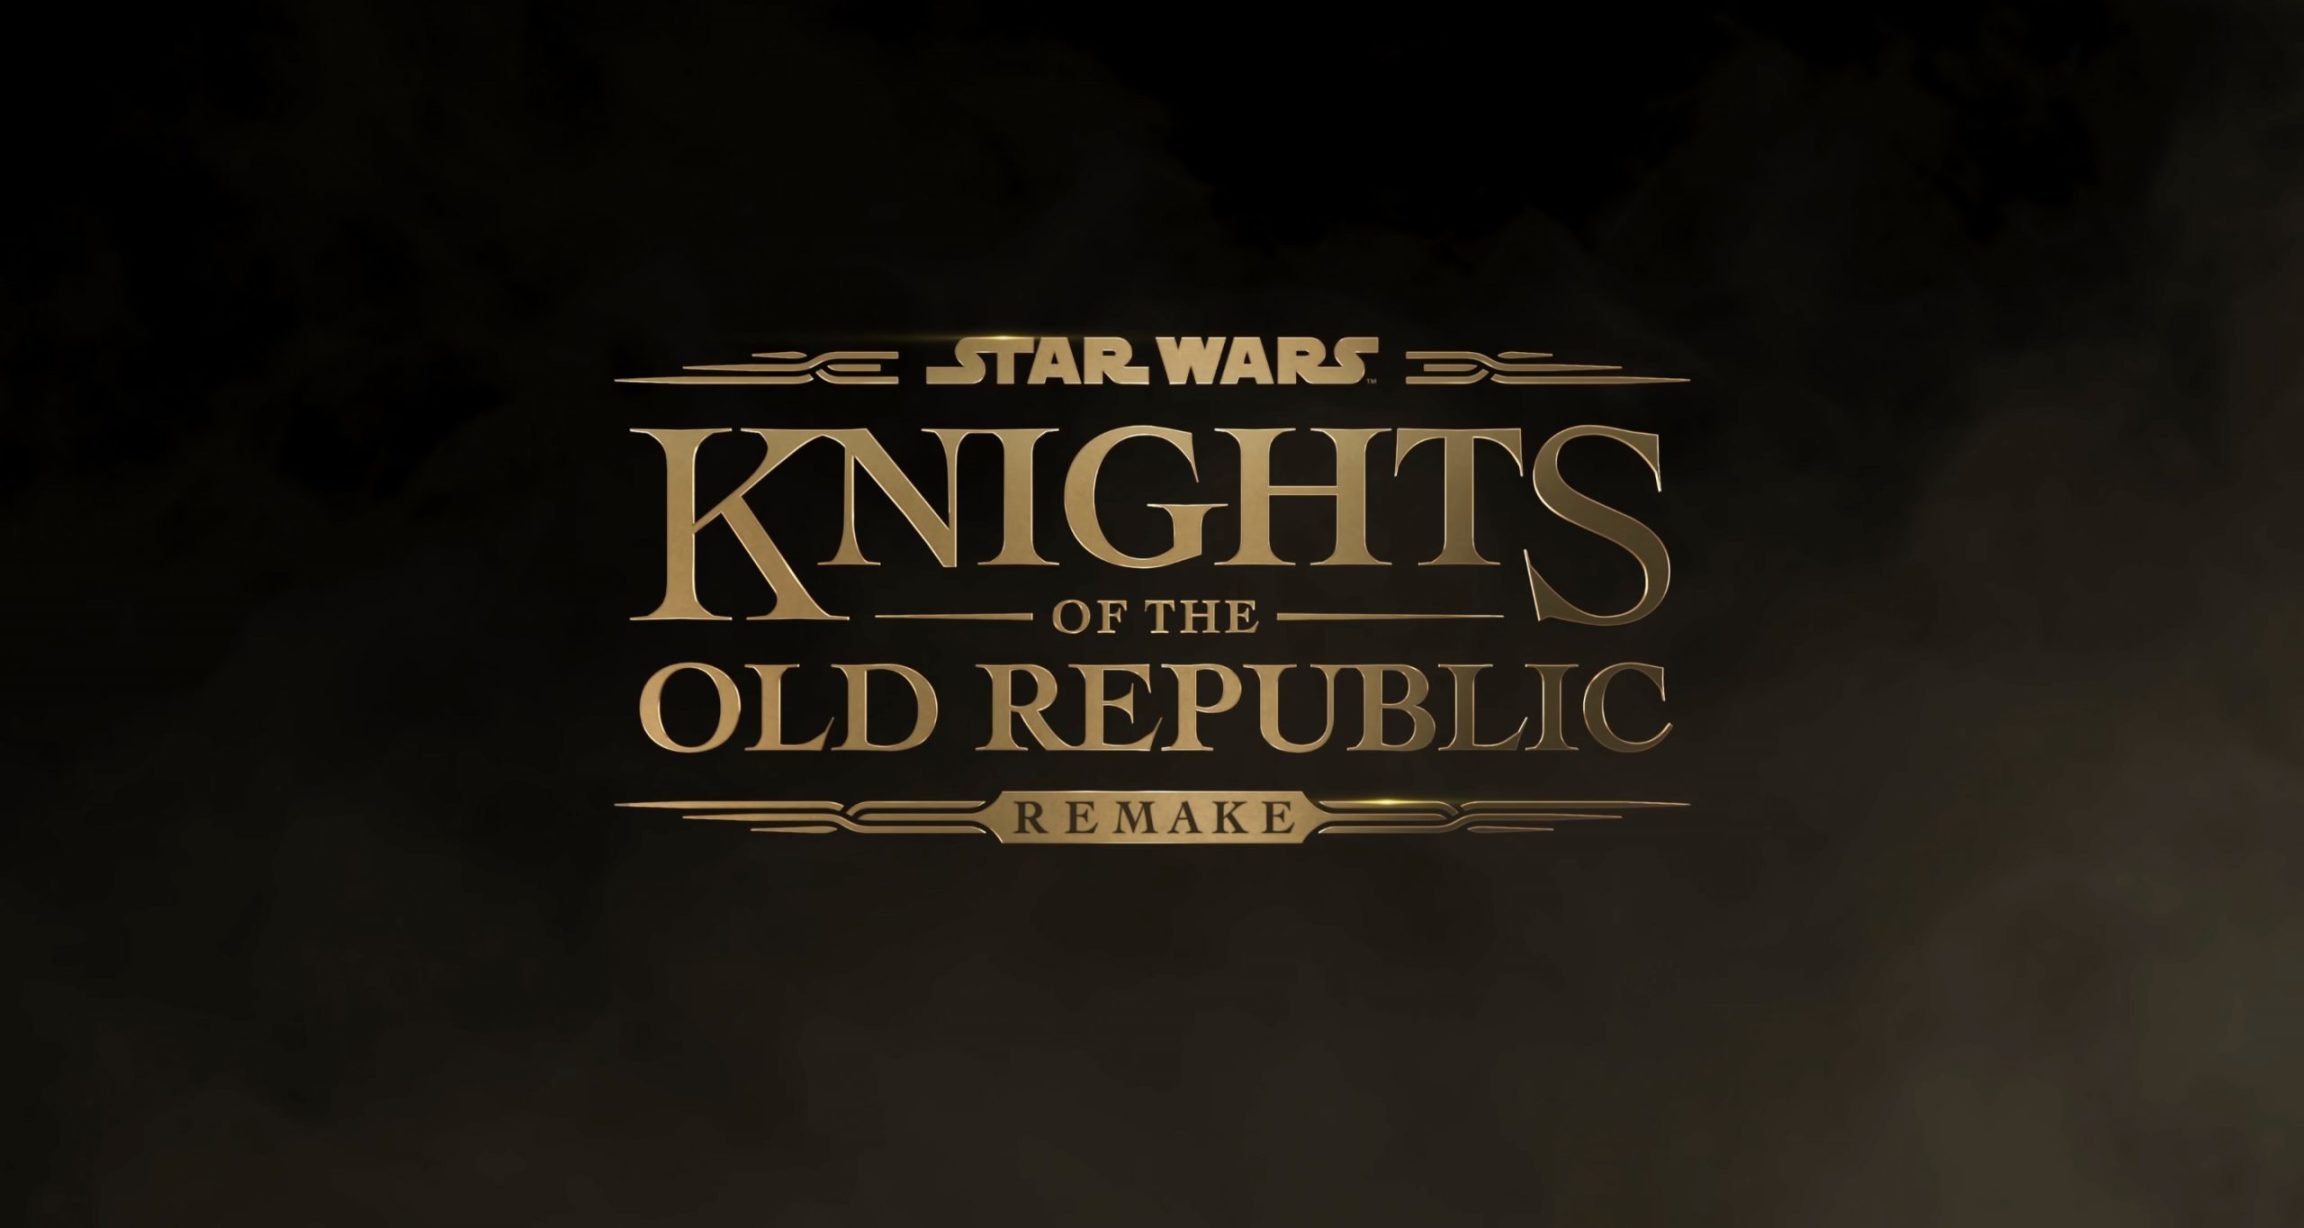 【PC游戏】命途多舛的《星球大战：旧共和国重制版》或已被取消